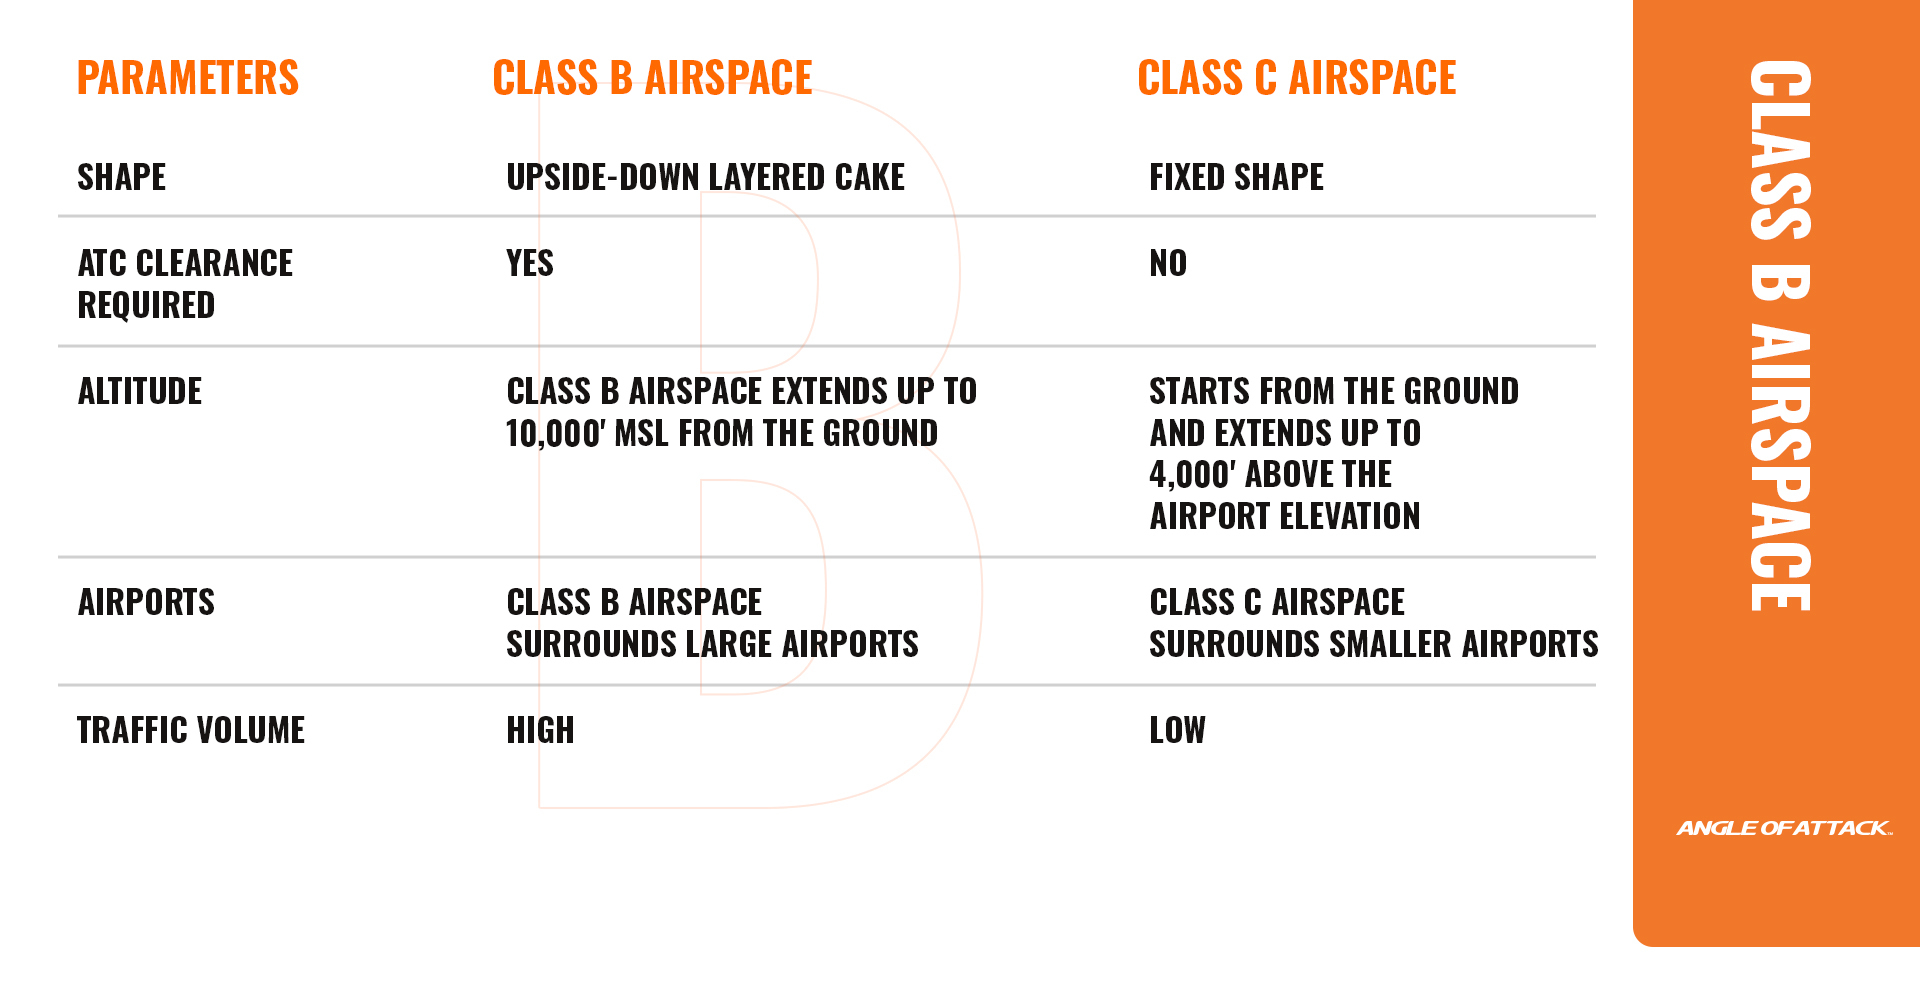 class b airspace